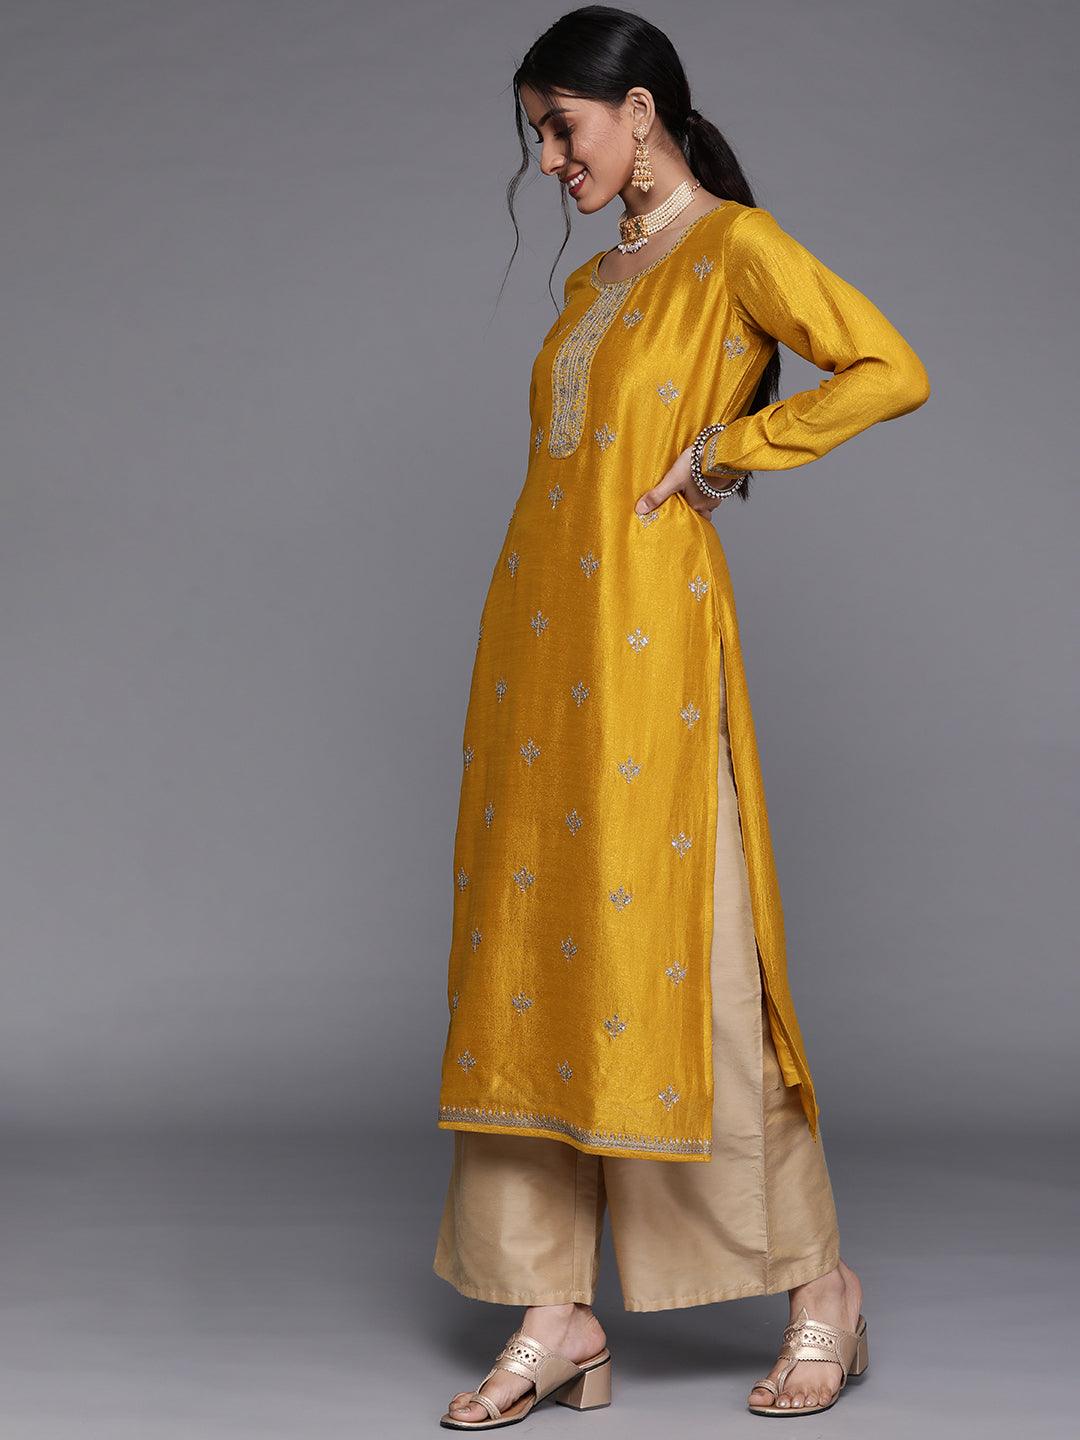 Net kurti designs style | Net kurti designs party wear | Net suits design  indian | Long gown dress | Net suits design indian, Lace dress, Designer  dresses